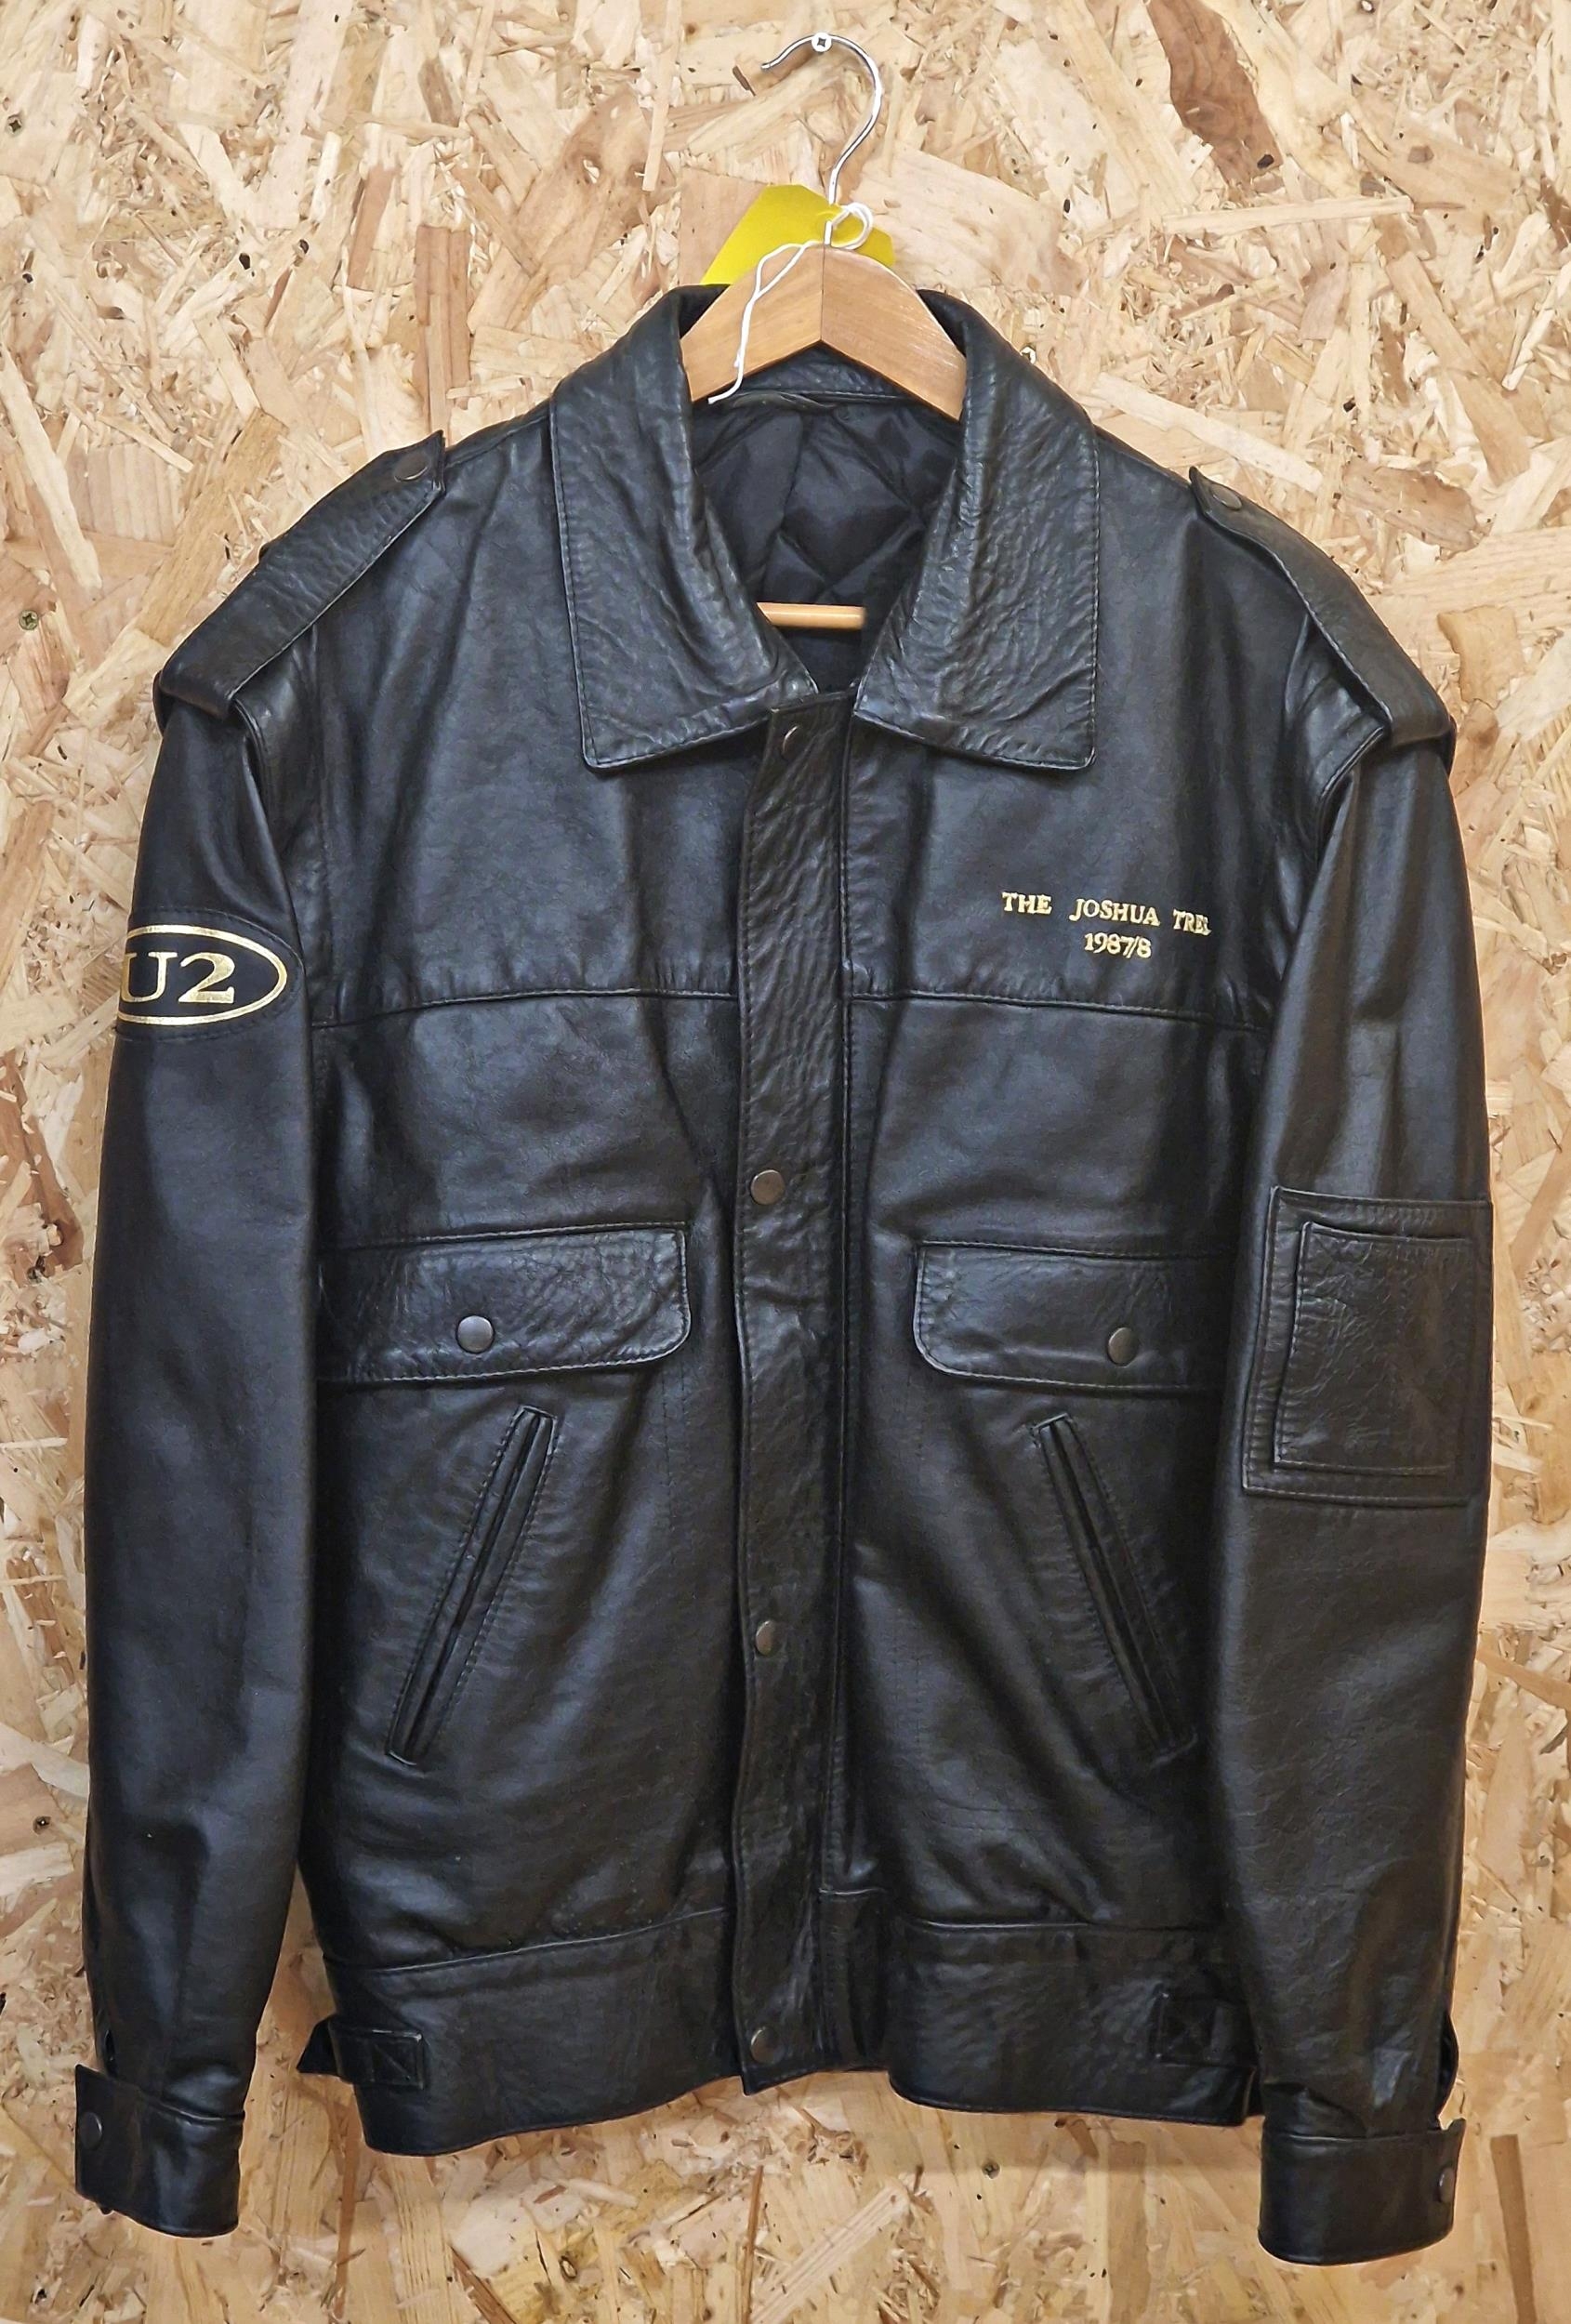 Rare U2 The Joshua Tree 1987/1988 Leather Crew Jacket. Size L. Mint, Unworn Condition With